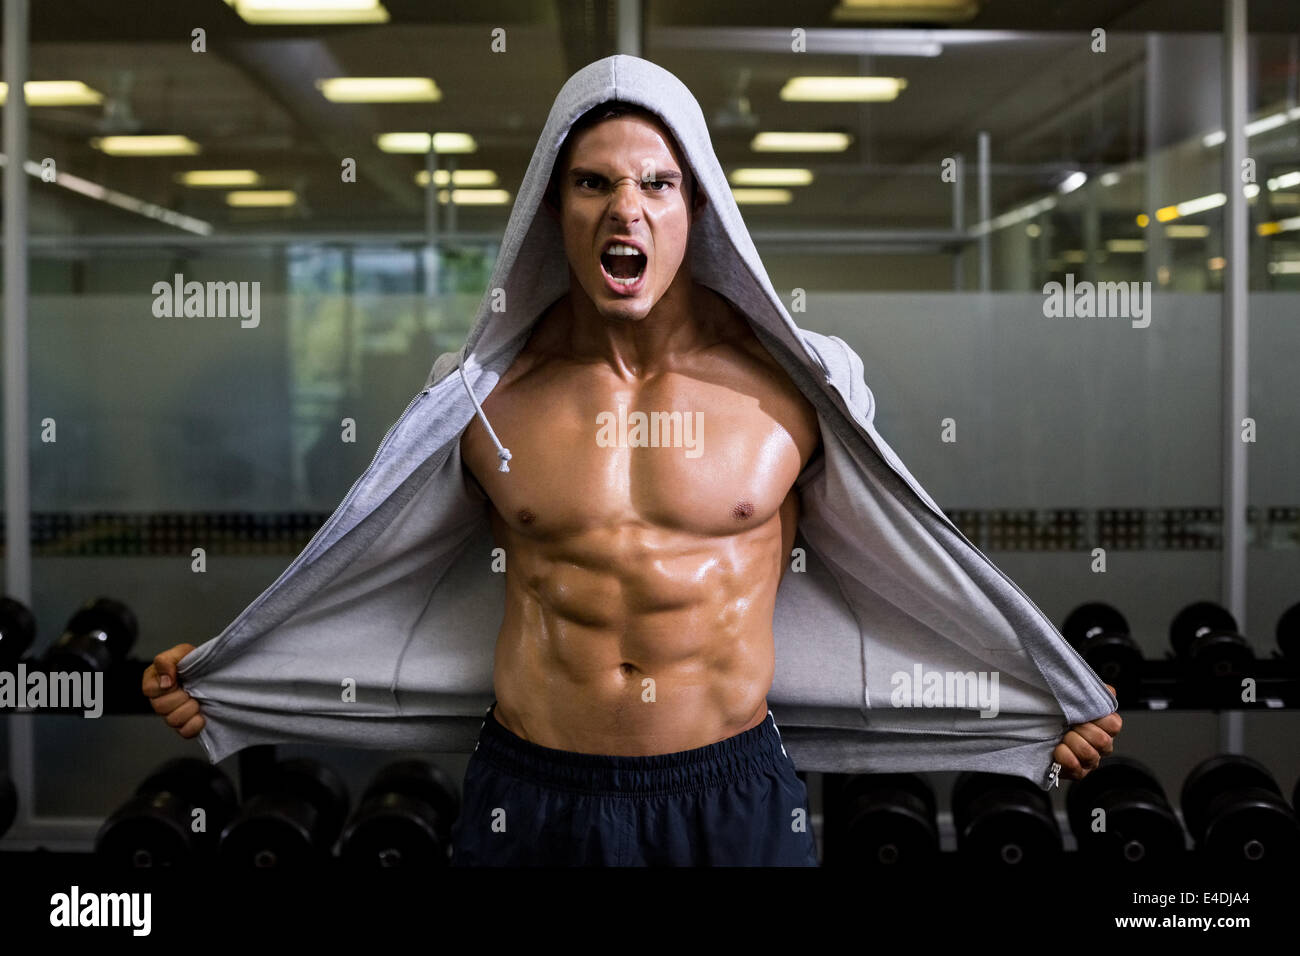 Muscular man shouting in health club Stock Photo